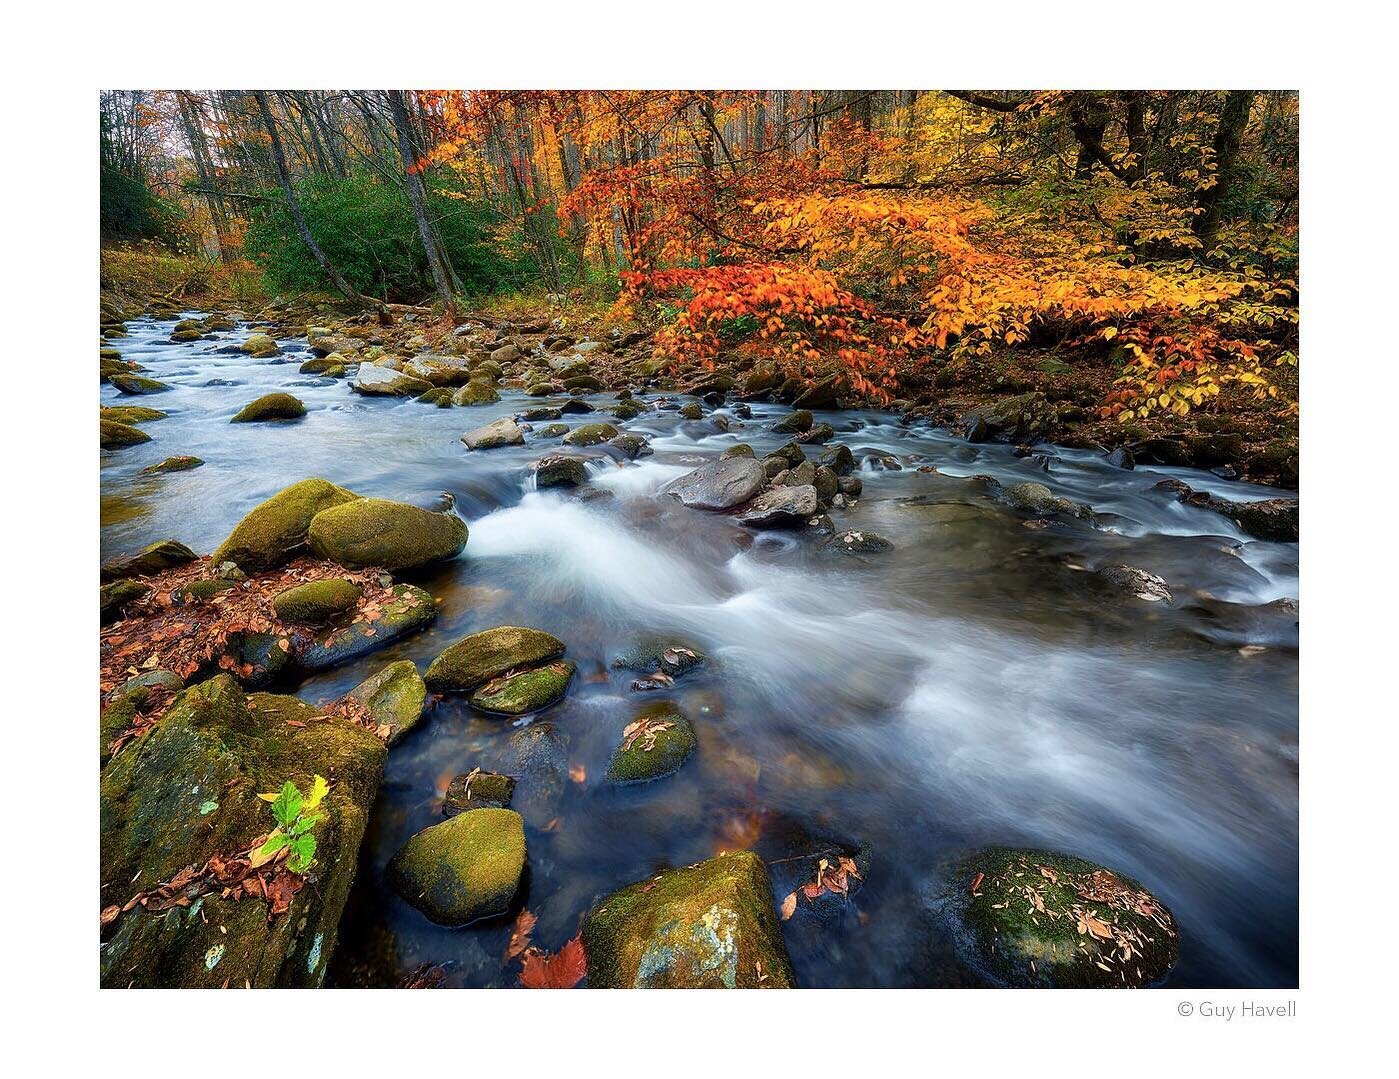 Oconaluftee River, North Carolina, USA. (2012) &copy; Guy Havell.

#northcarolina #fallfoliage #prettypictures #landscapephotography #autumnvibes🍁 #river #nature #beautifuldestinations #mediumformat #phaseonephoto #alpacameras #travel #usa